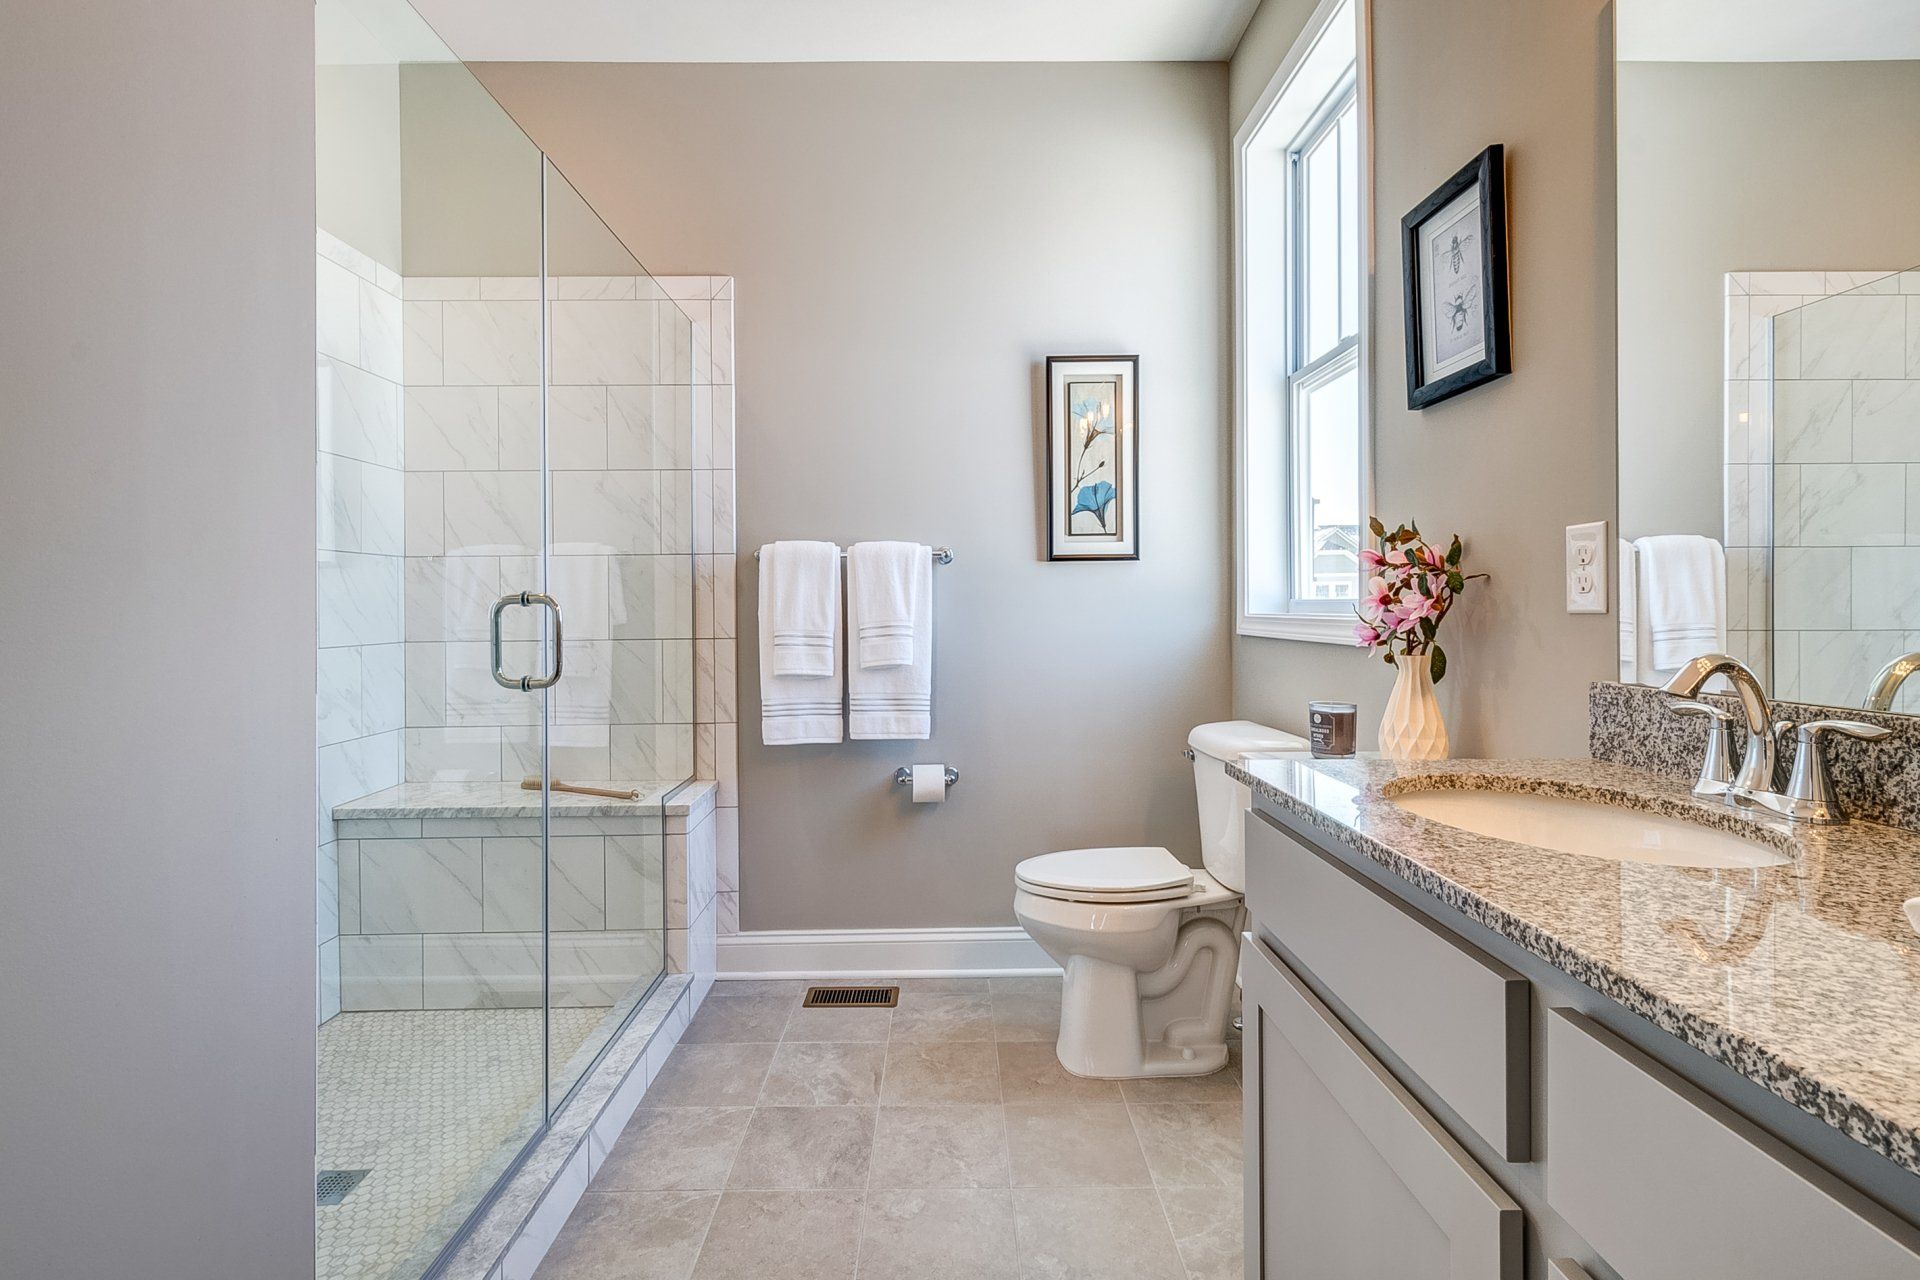 Shower, toilet and bathroom countertop